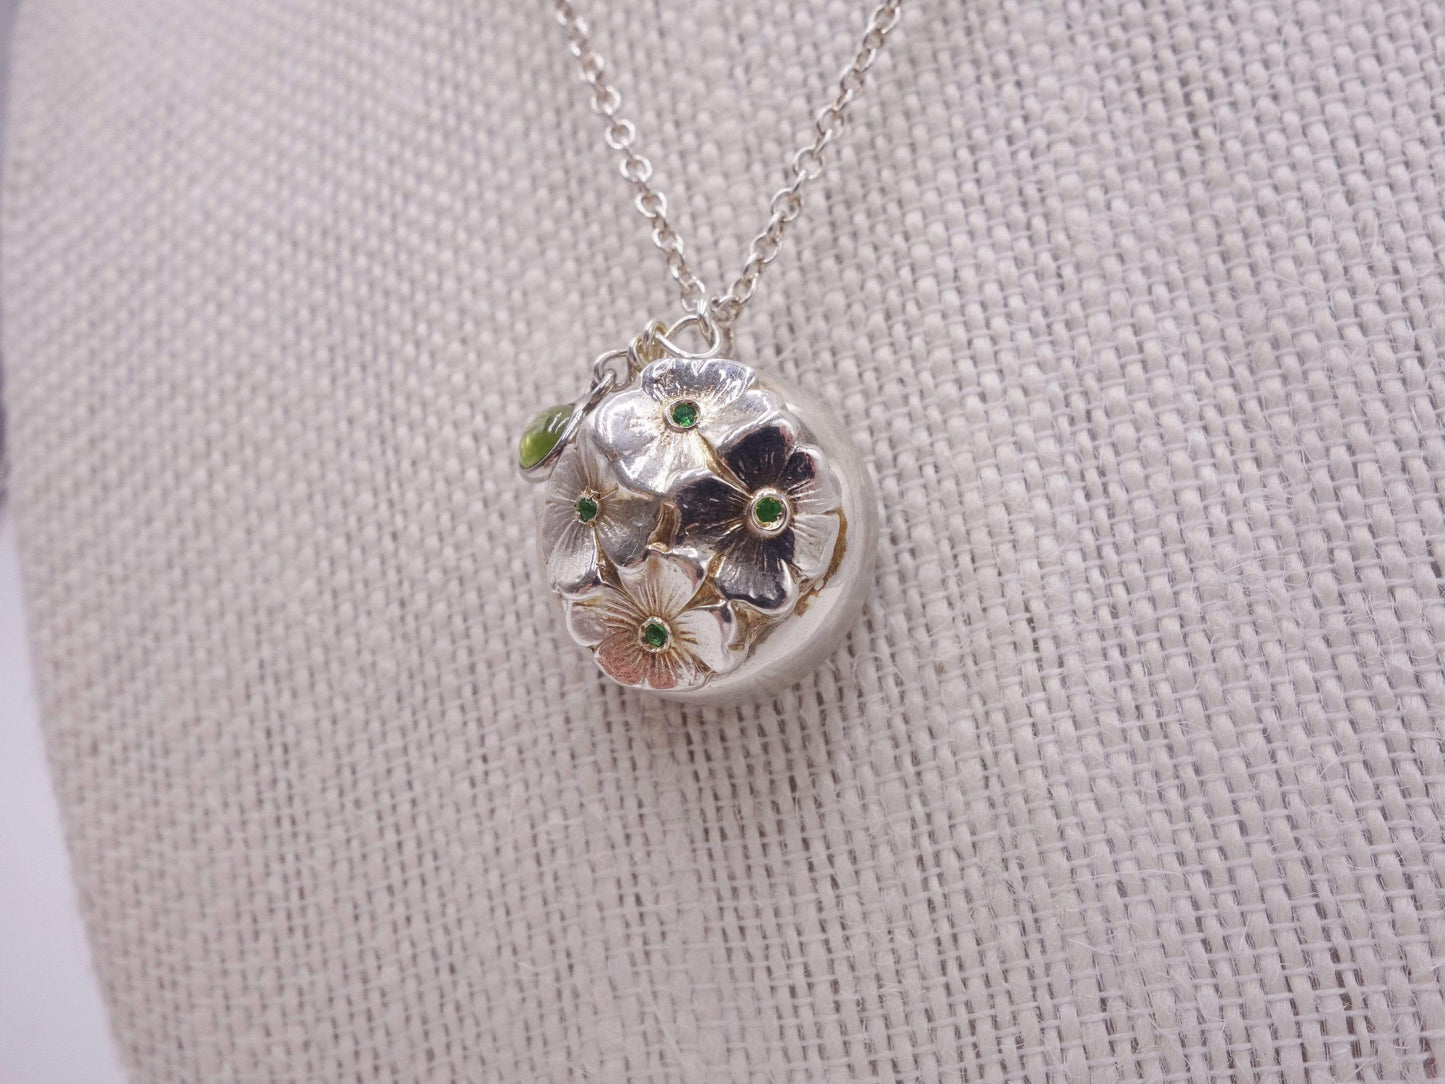 Silver dome pendant with emerald